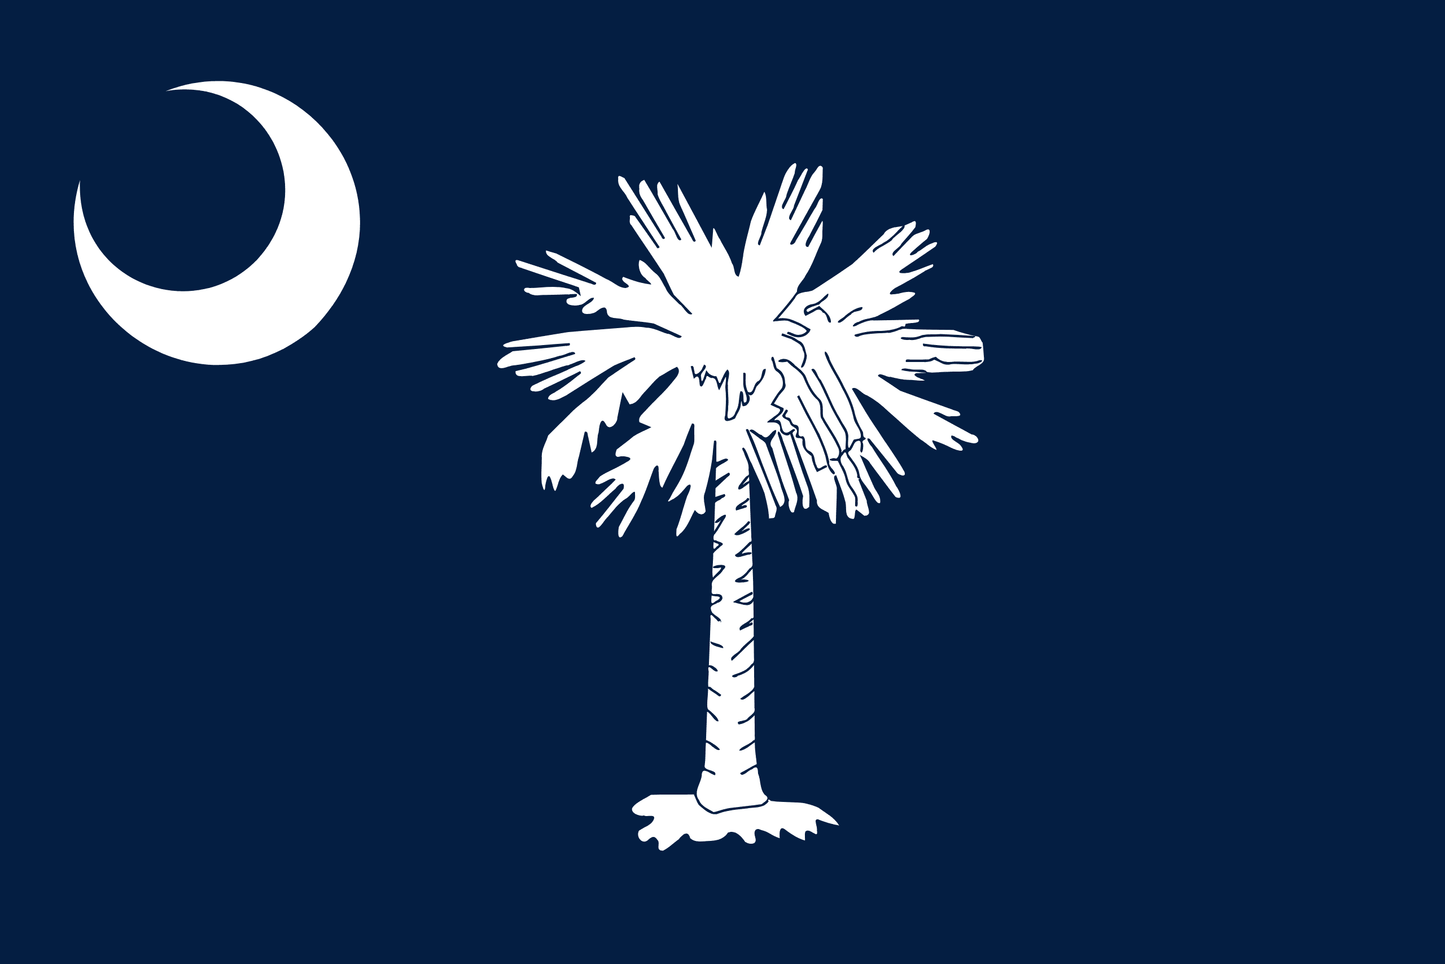 South Carolina State Flag - 3x5 Feet